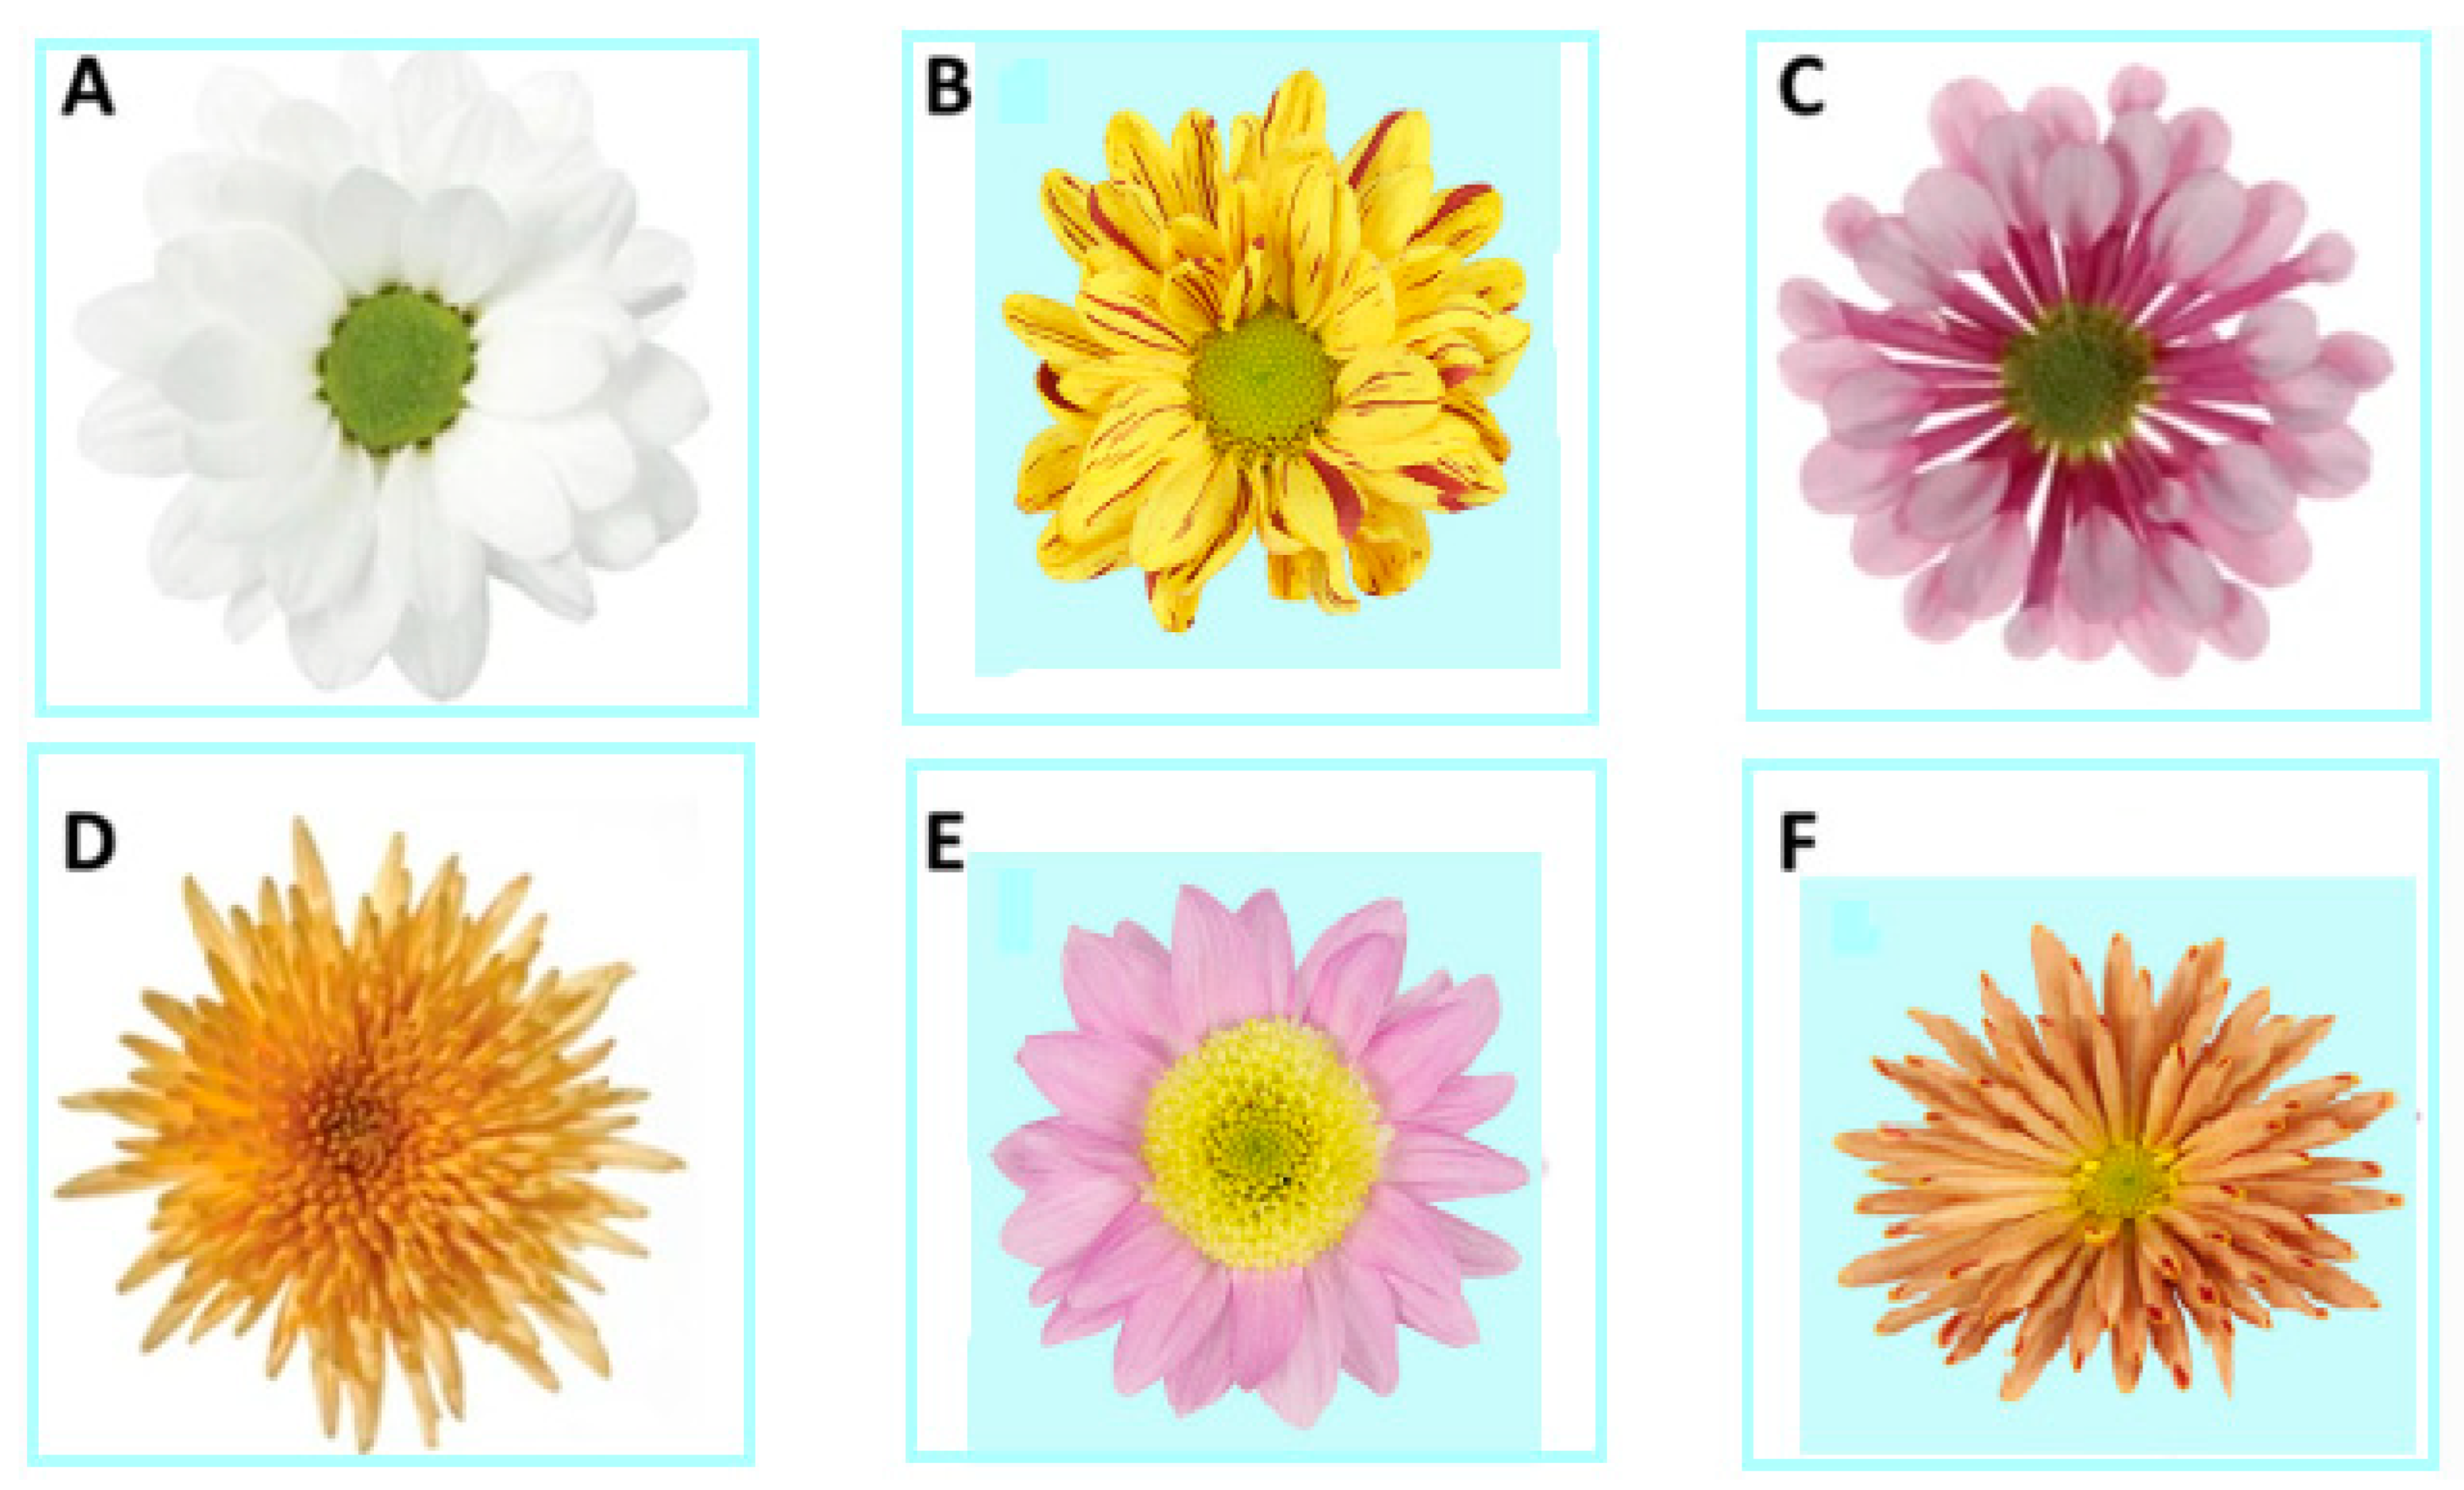 the chrysanthemums critical analysis